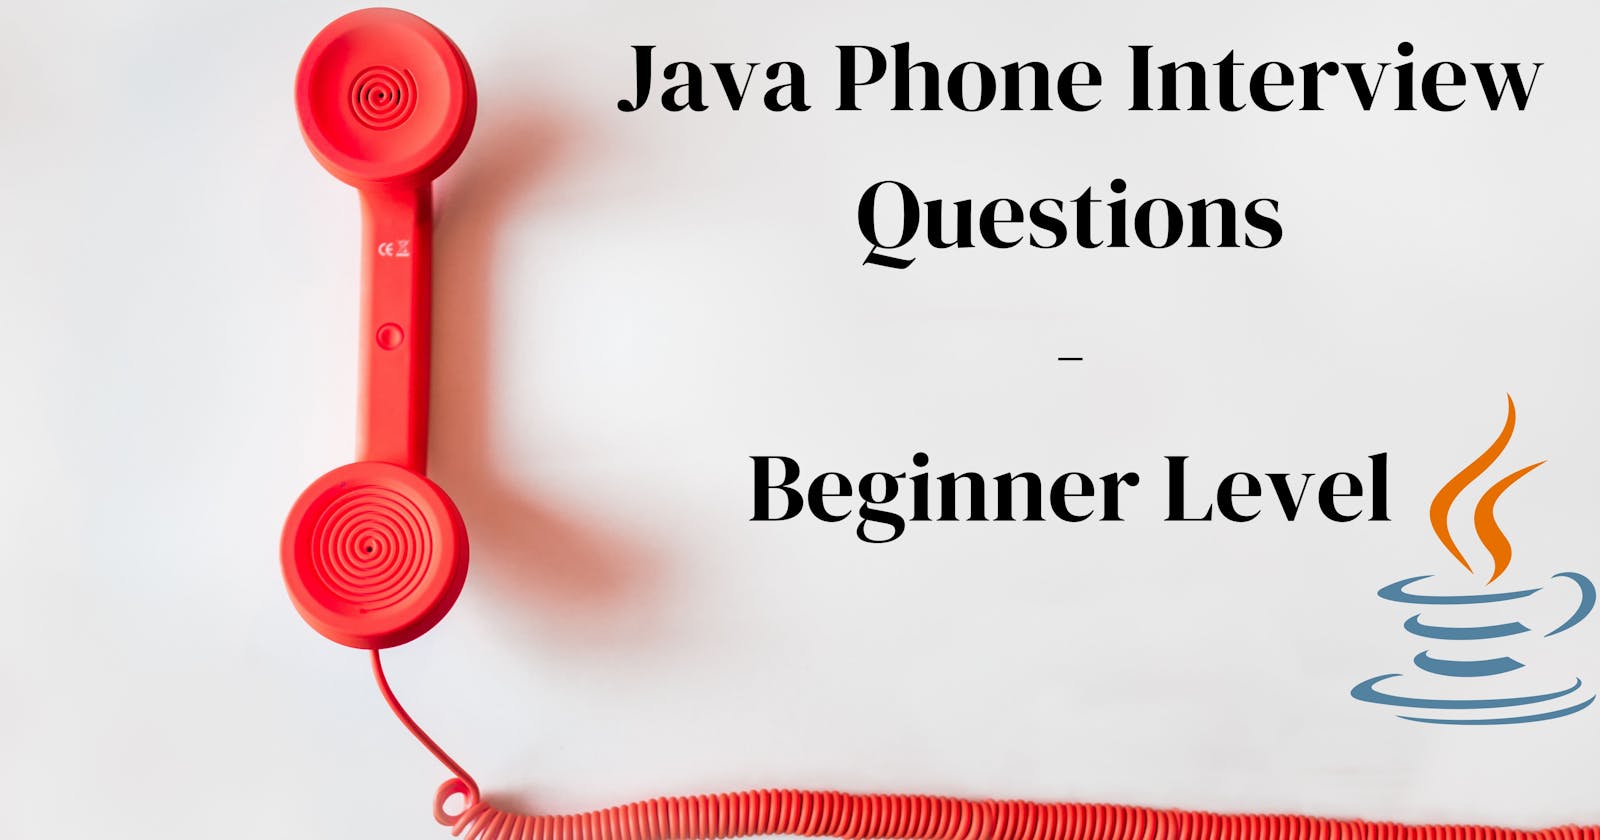 Java Phone Interview Questions - Beginner Level